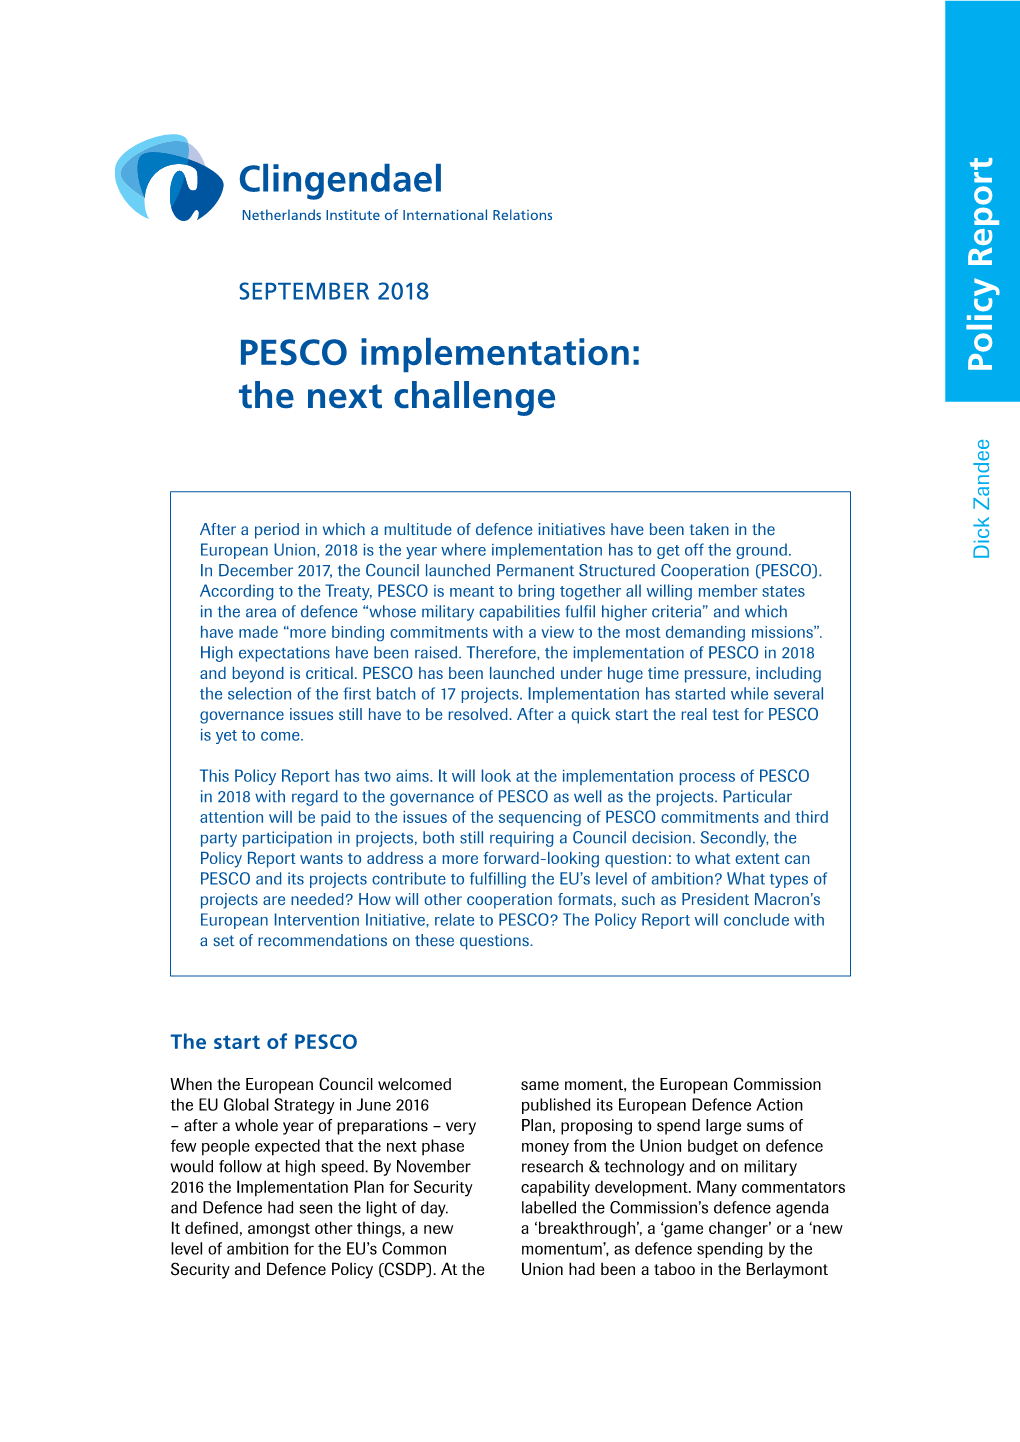 PESCO Implementation: the Next Challenge